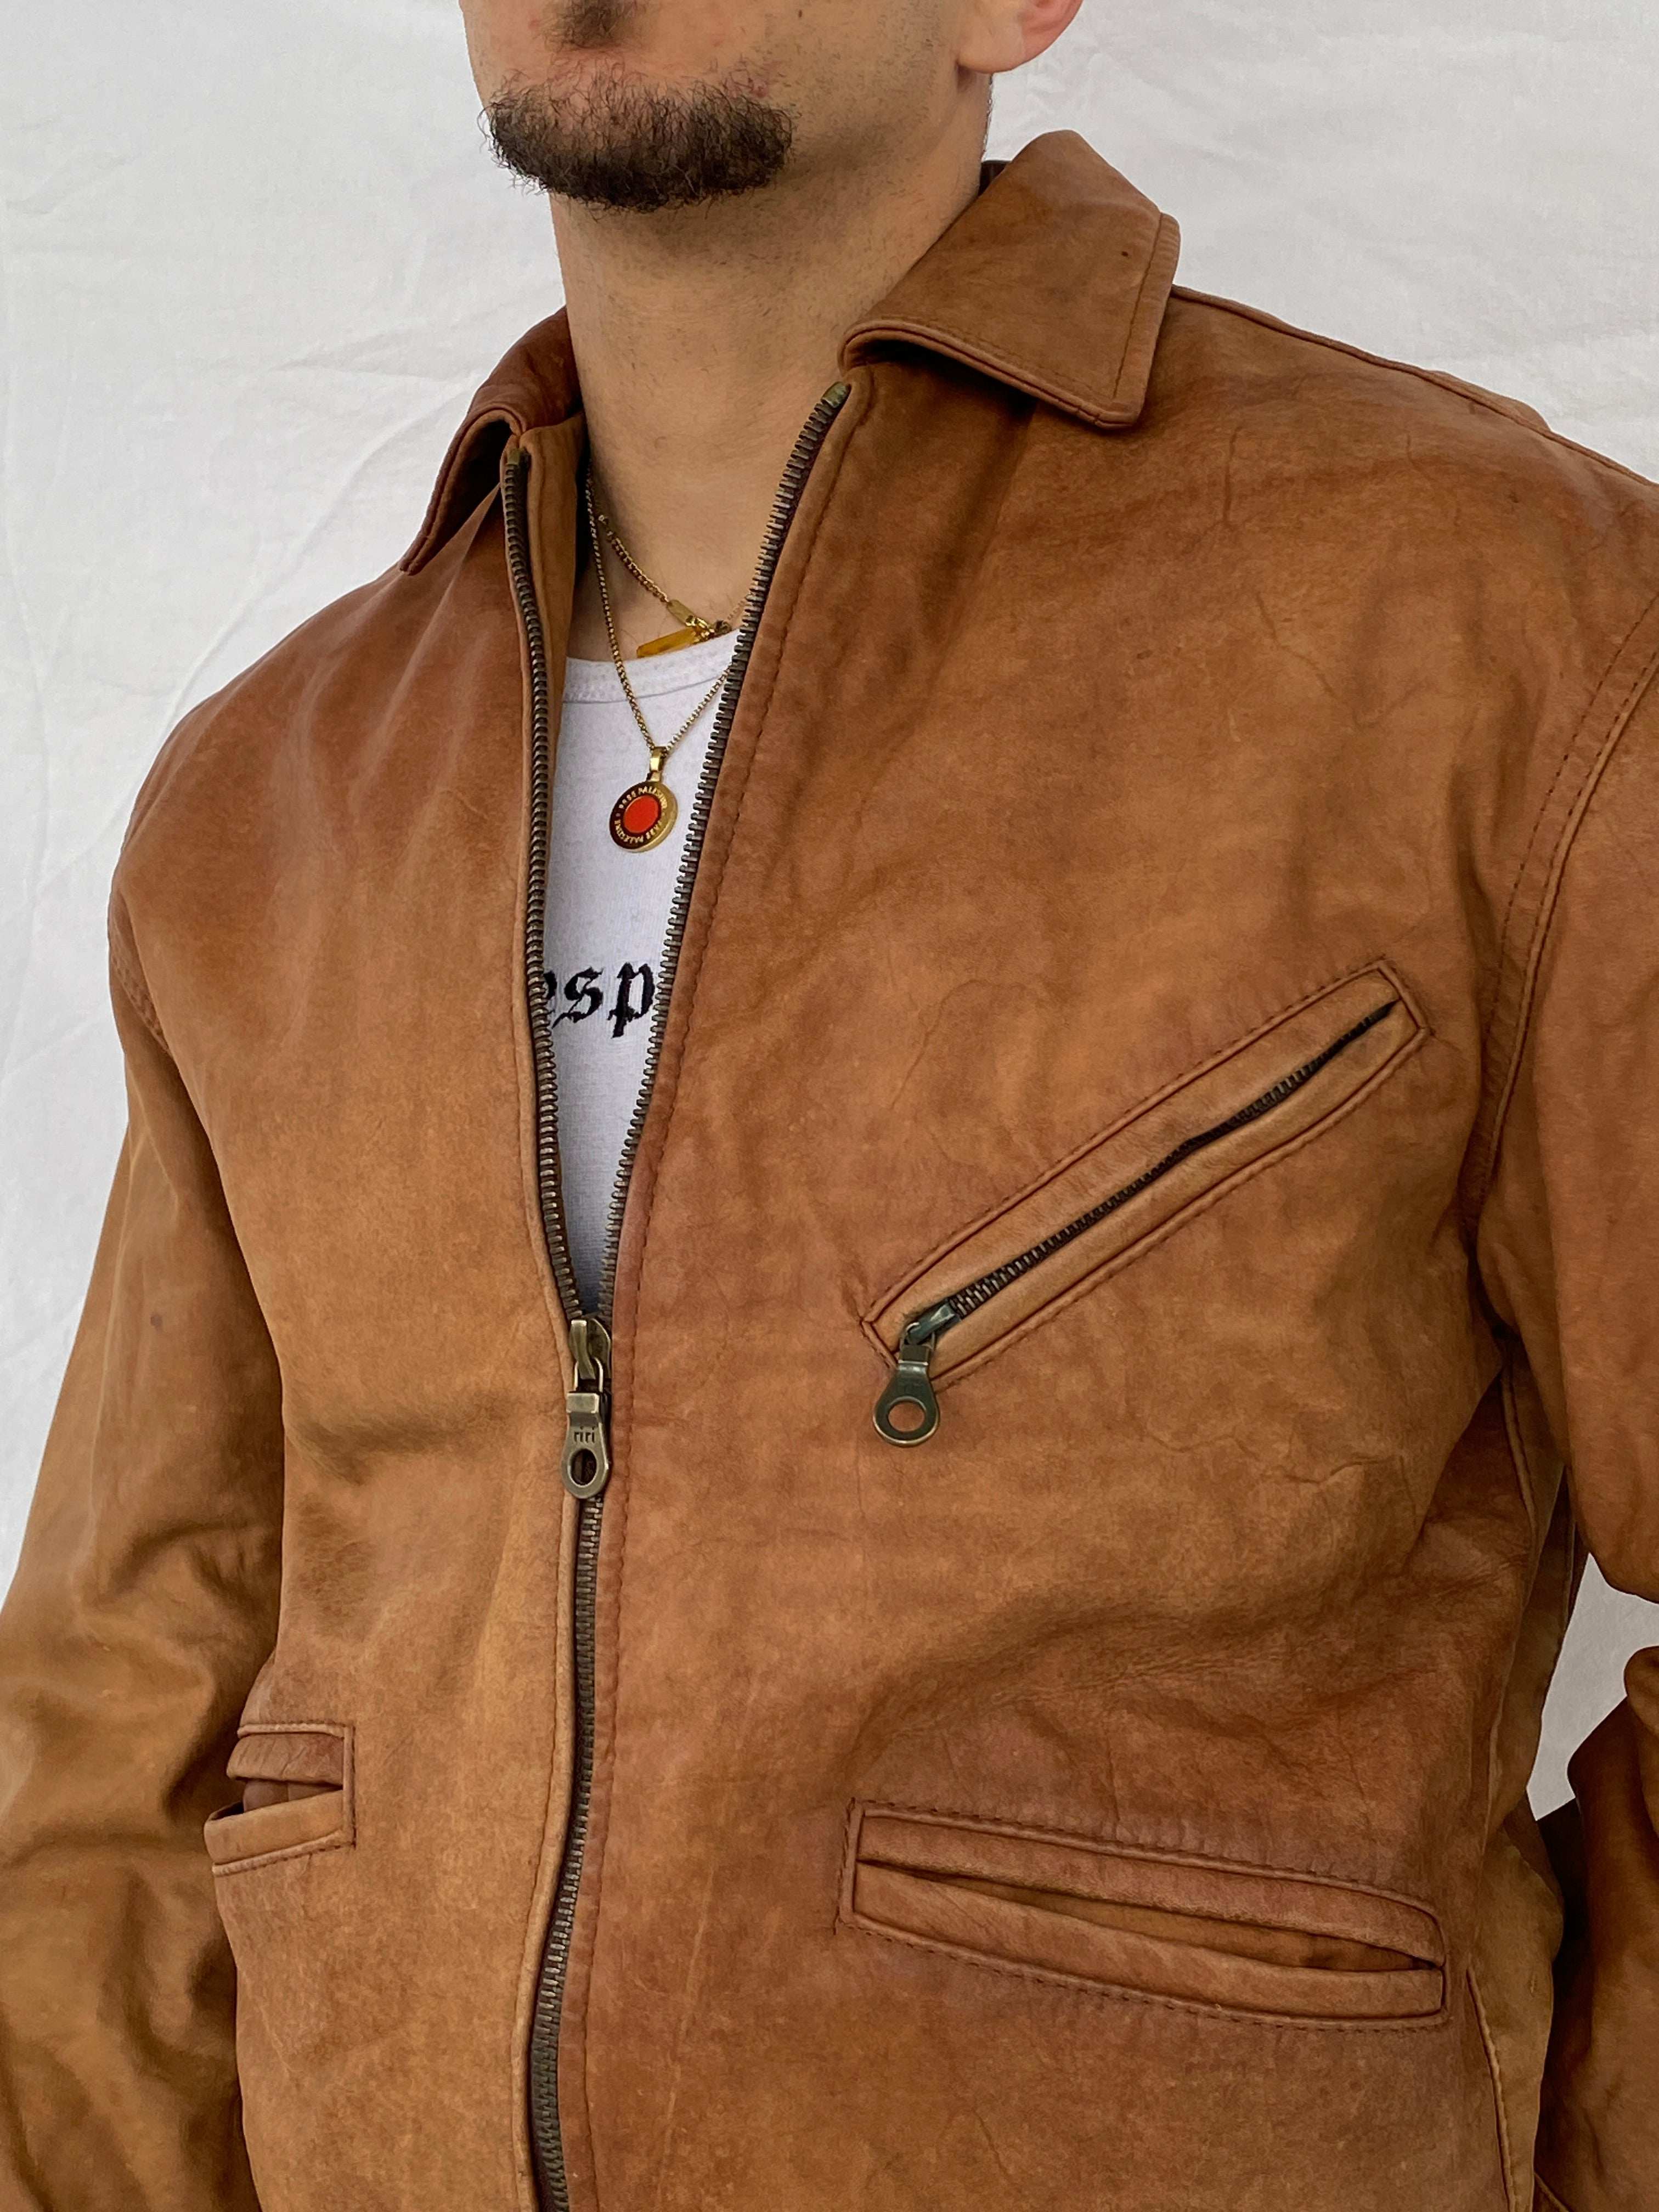 Online Vintage Store  90's Men Faux Fur Lined Leather Jacket